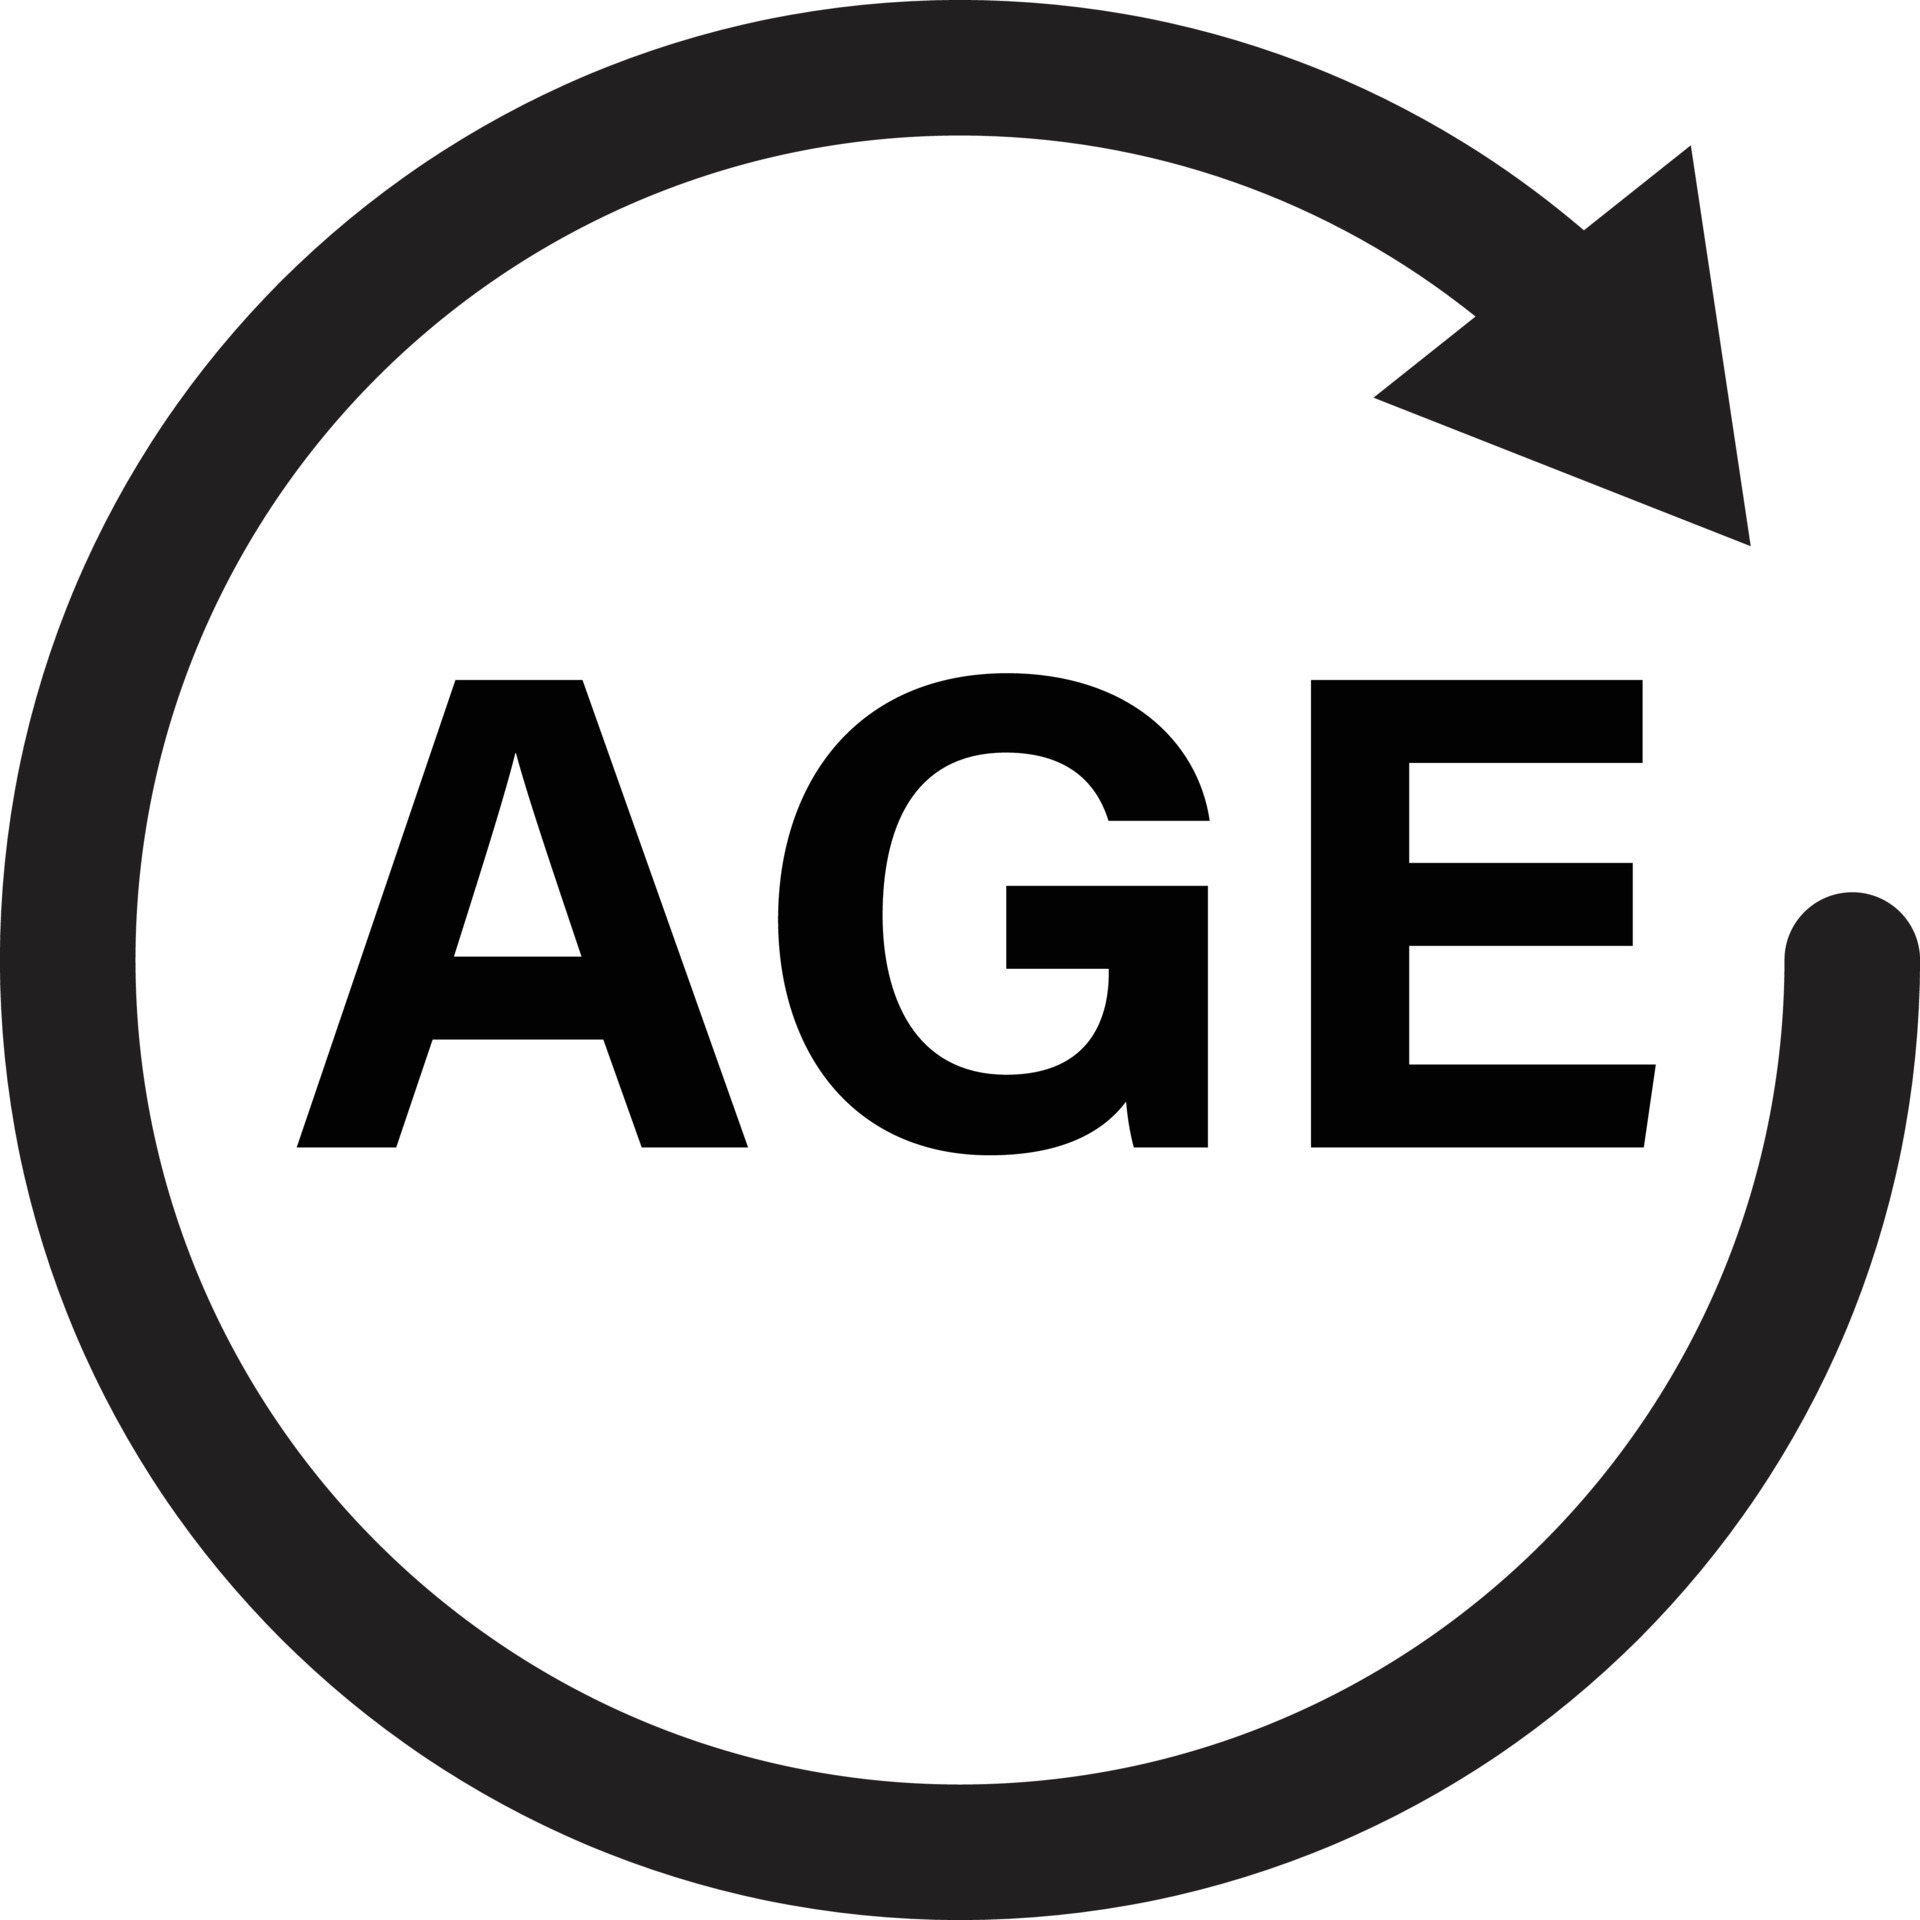 Age limit. Возраст иконка. Символ надежности в логотипе. Значок возраста. QK logo.